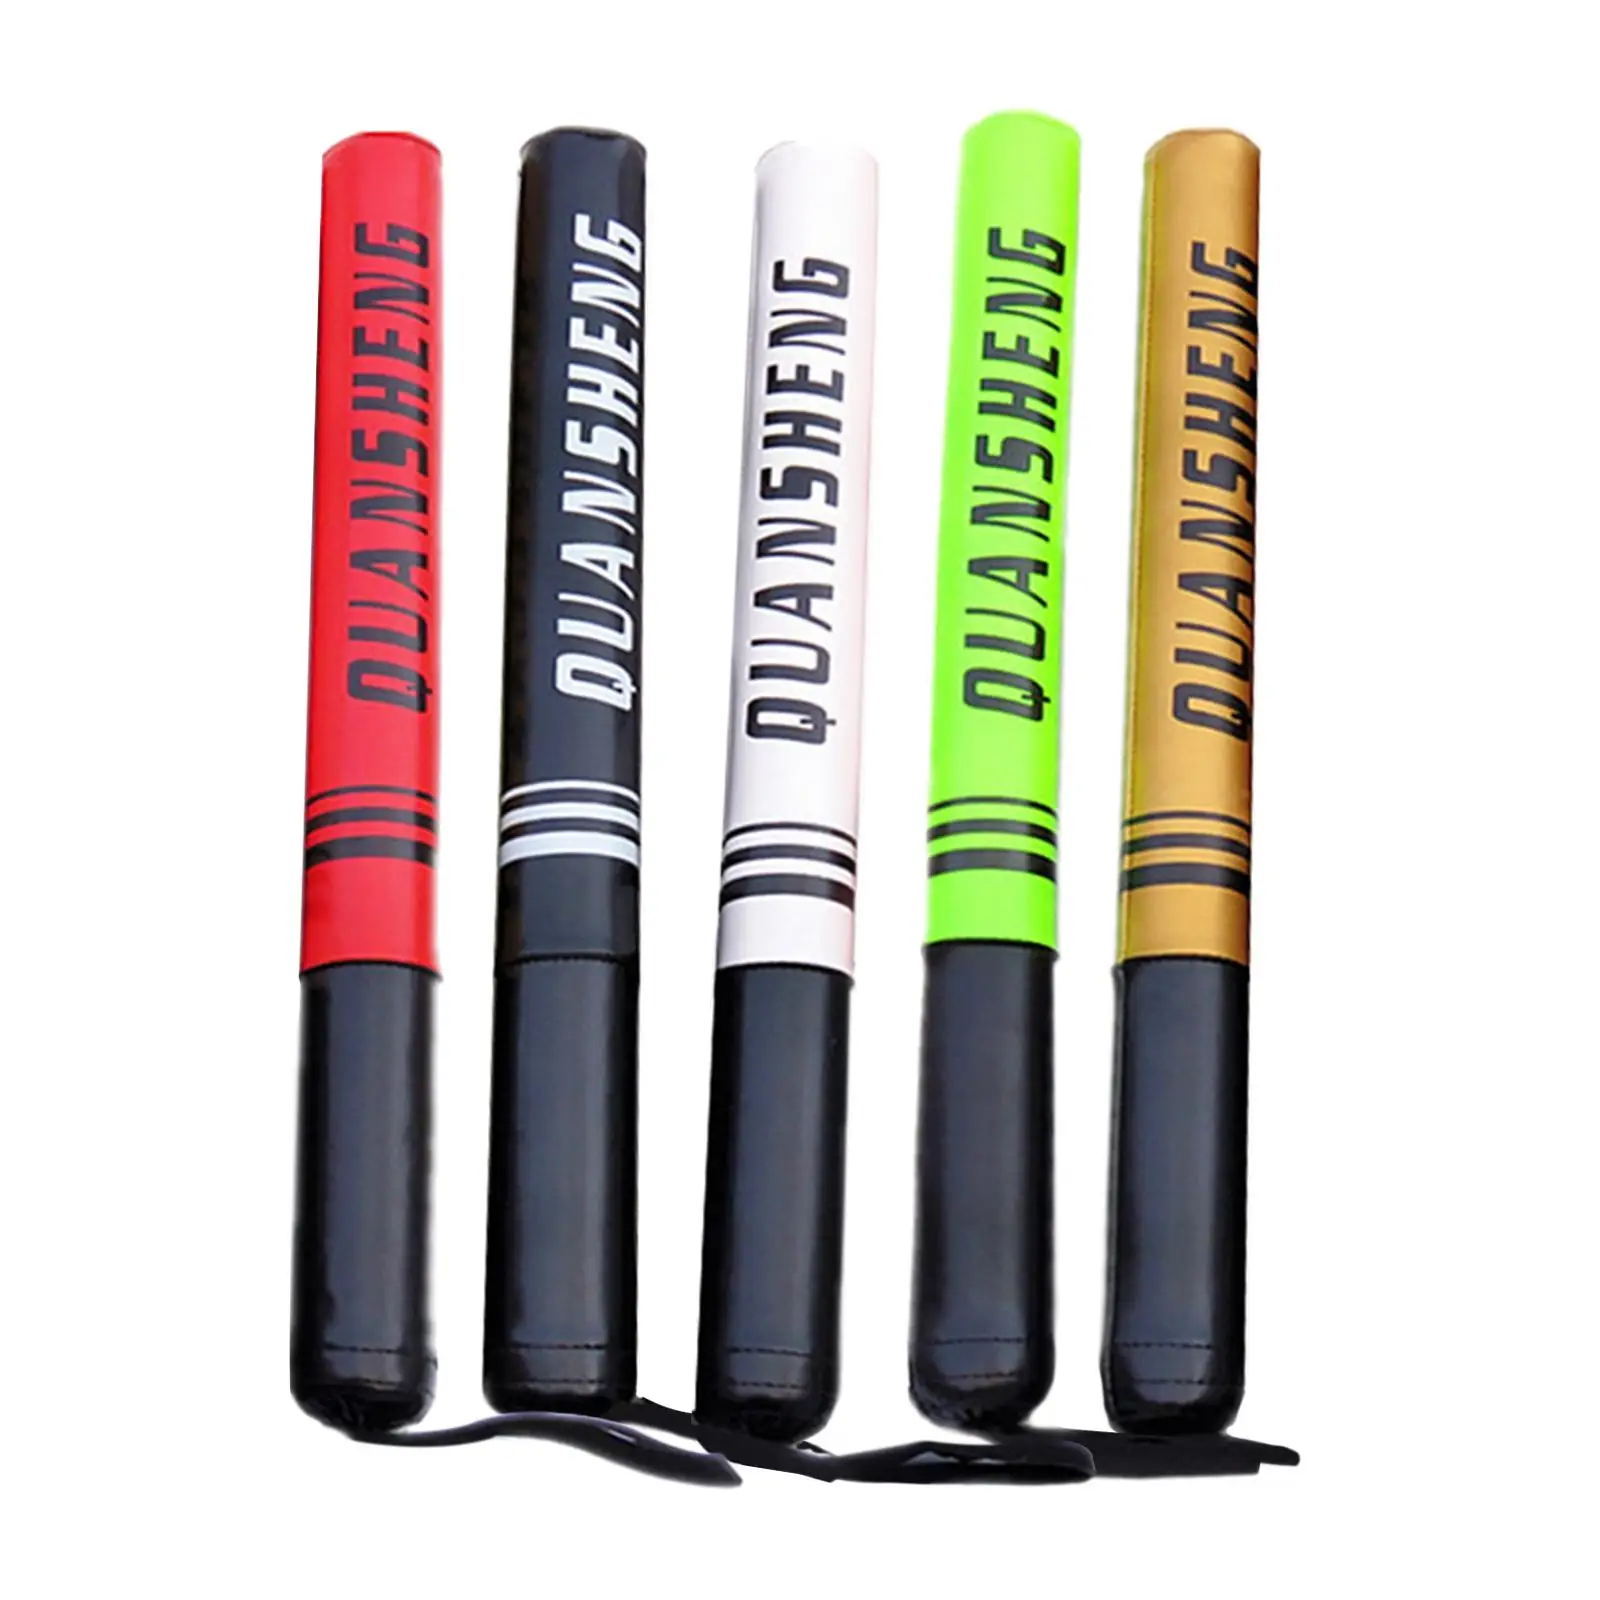 Portable Boxing Training Stick Target Training Equipment PU Focus Sticks